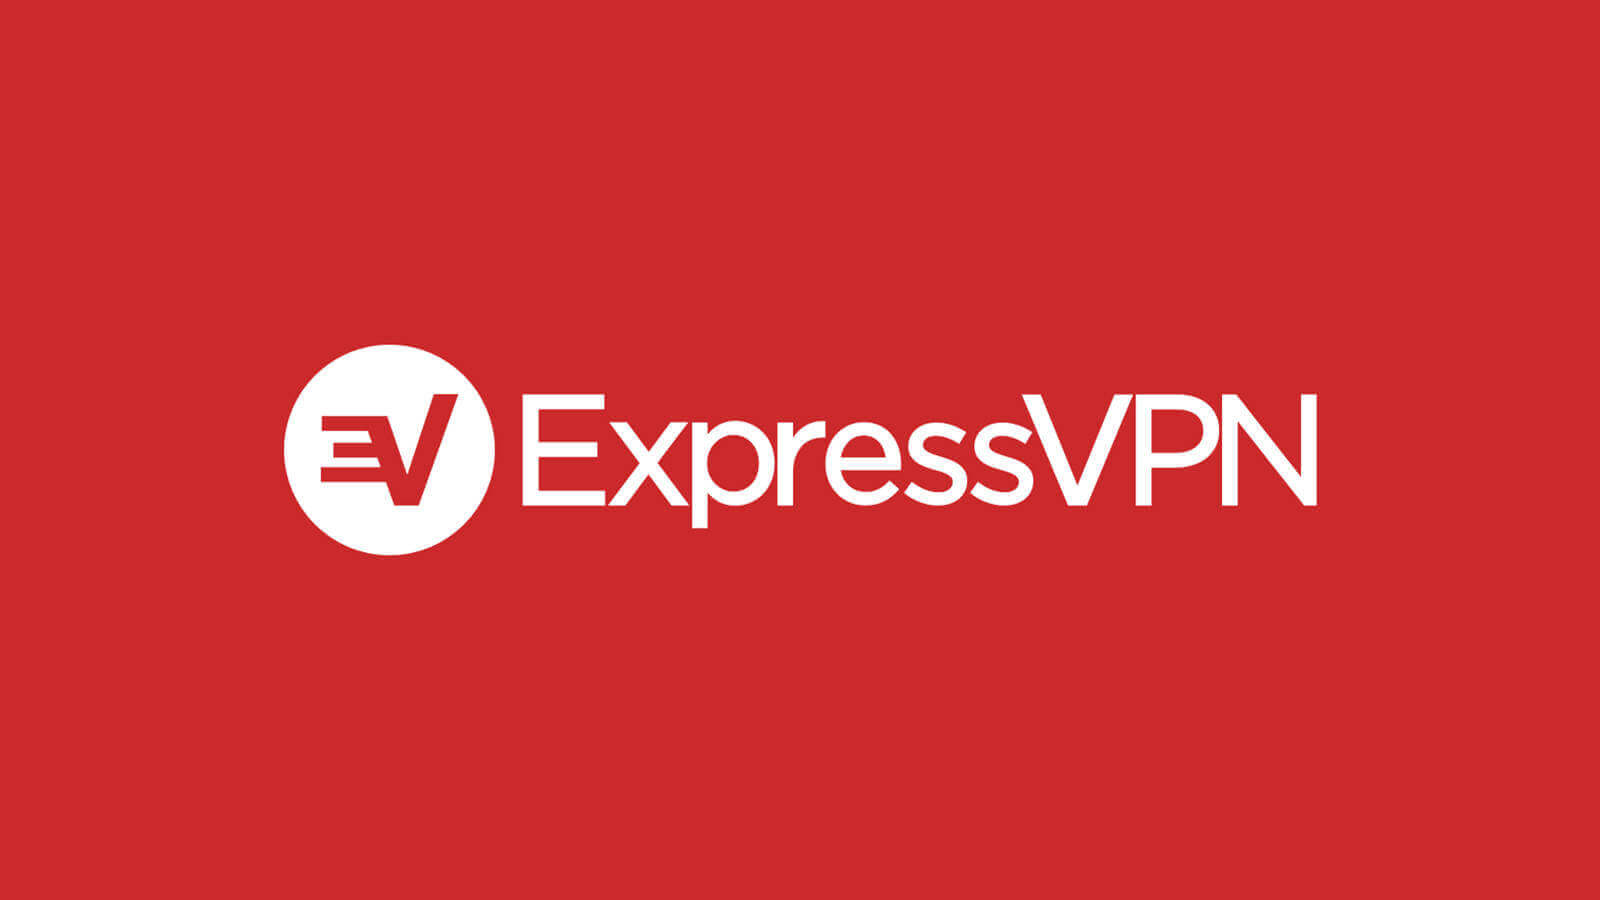 Express vpn Product key